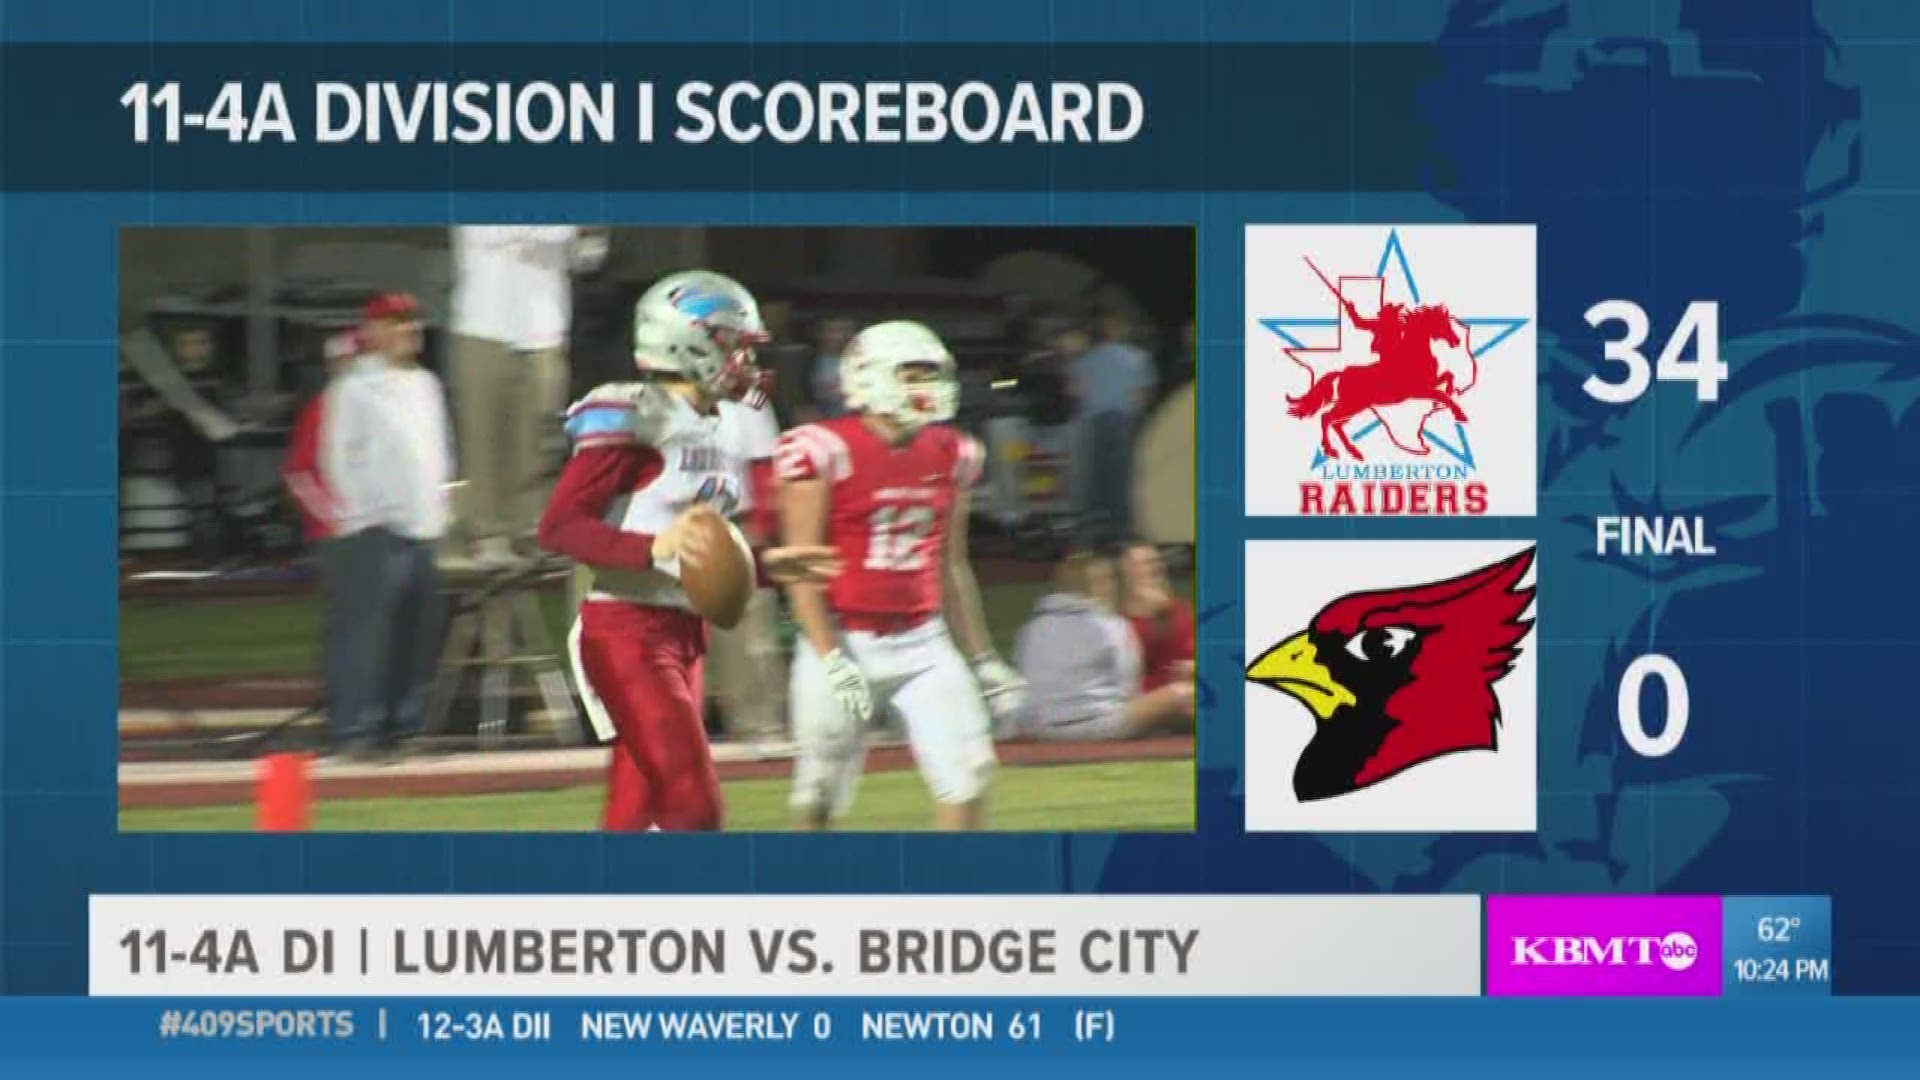 WEEK 9: Lumberton High School shuts out Bridge City 34 - 0 in the 409Sports Game of the Week